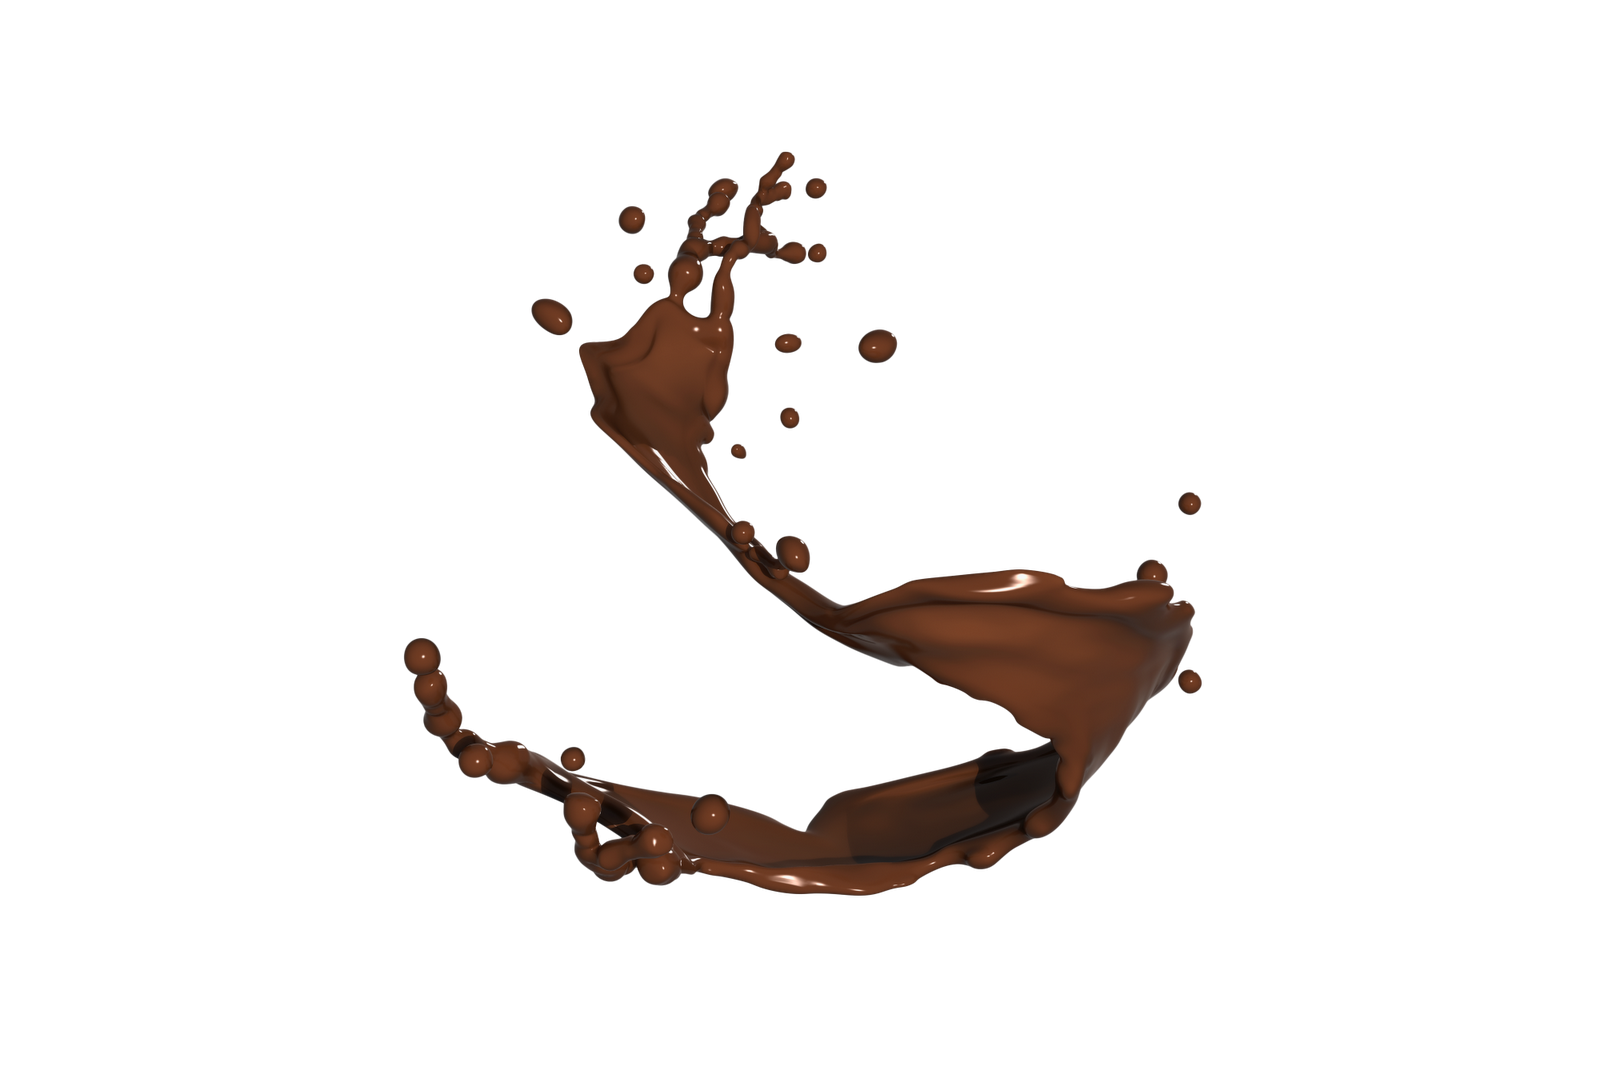 Download PNG image - Chocolate Splash PNG Image 